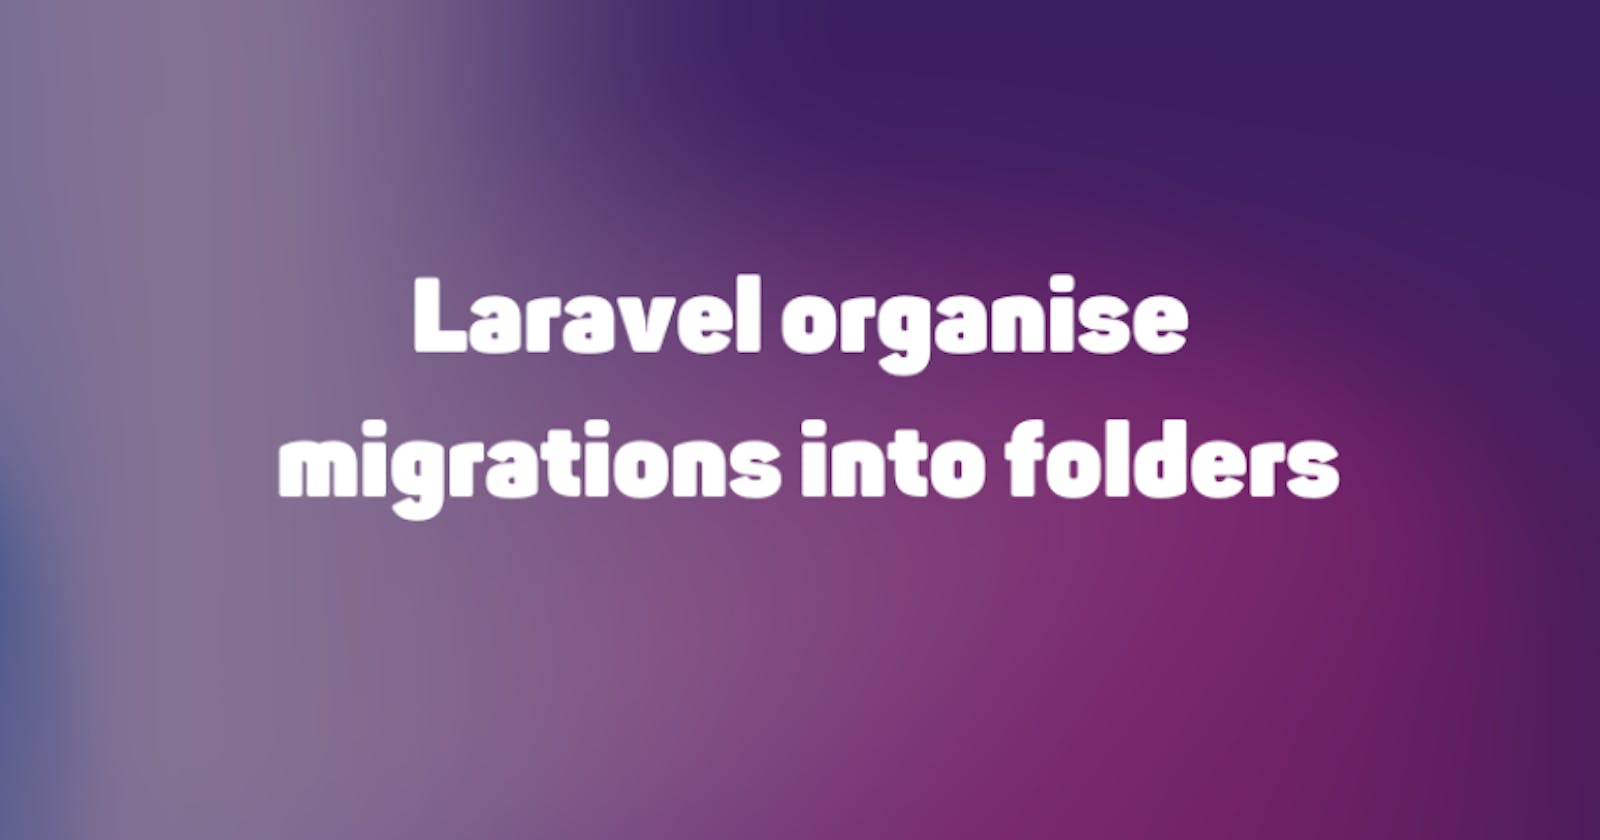 Laravel organise migrations into folders